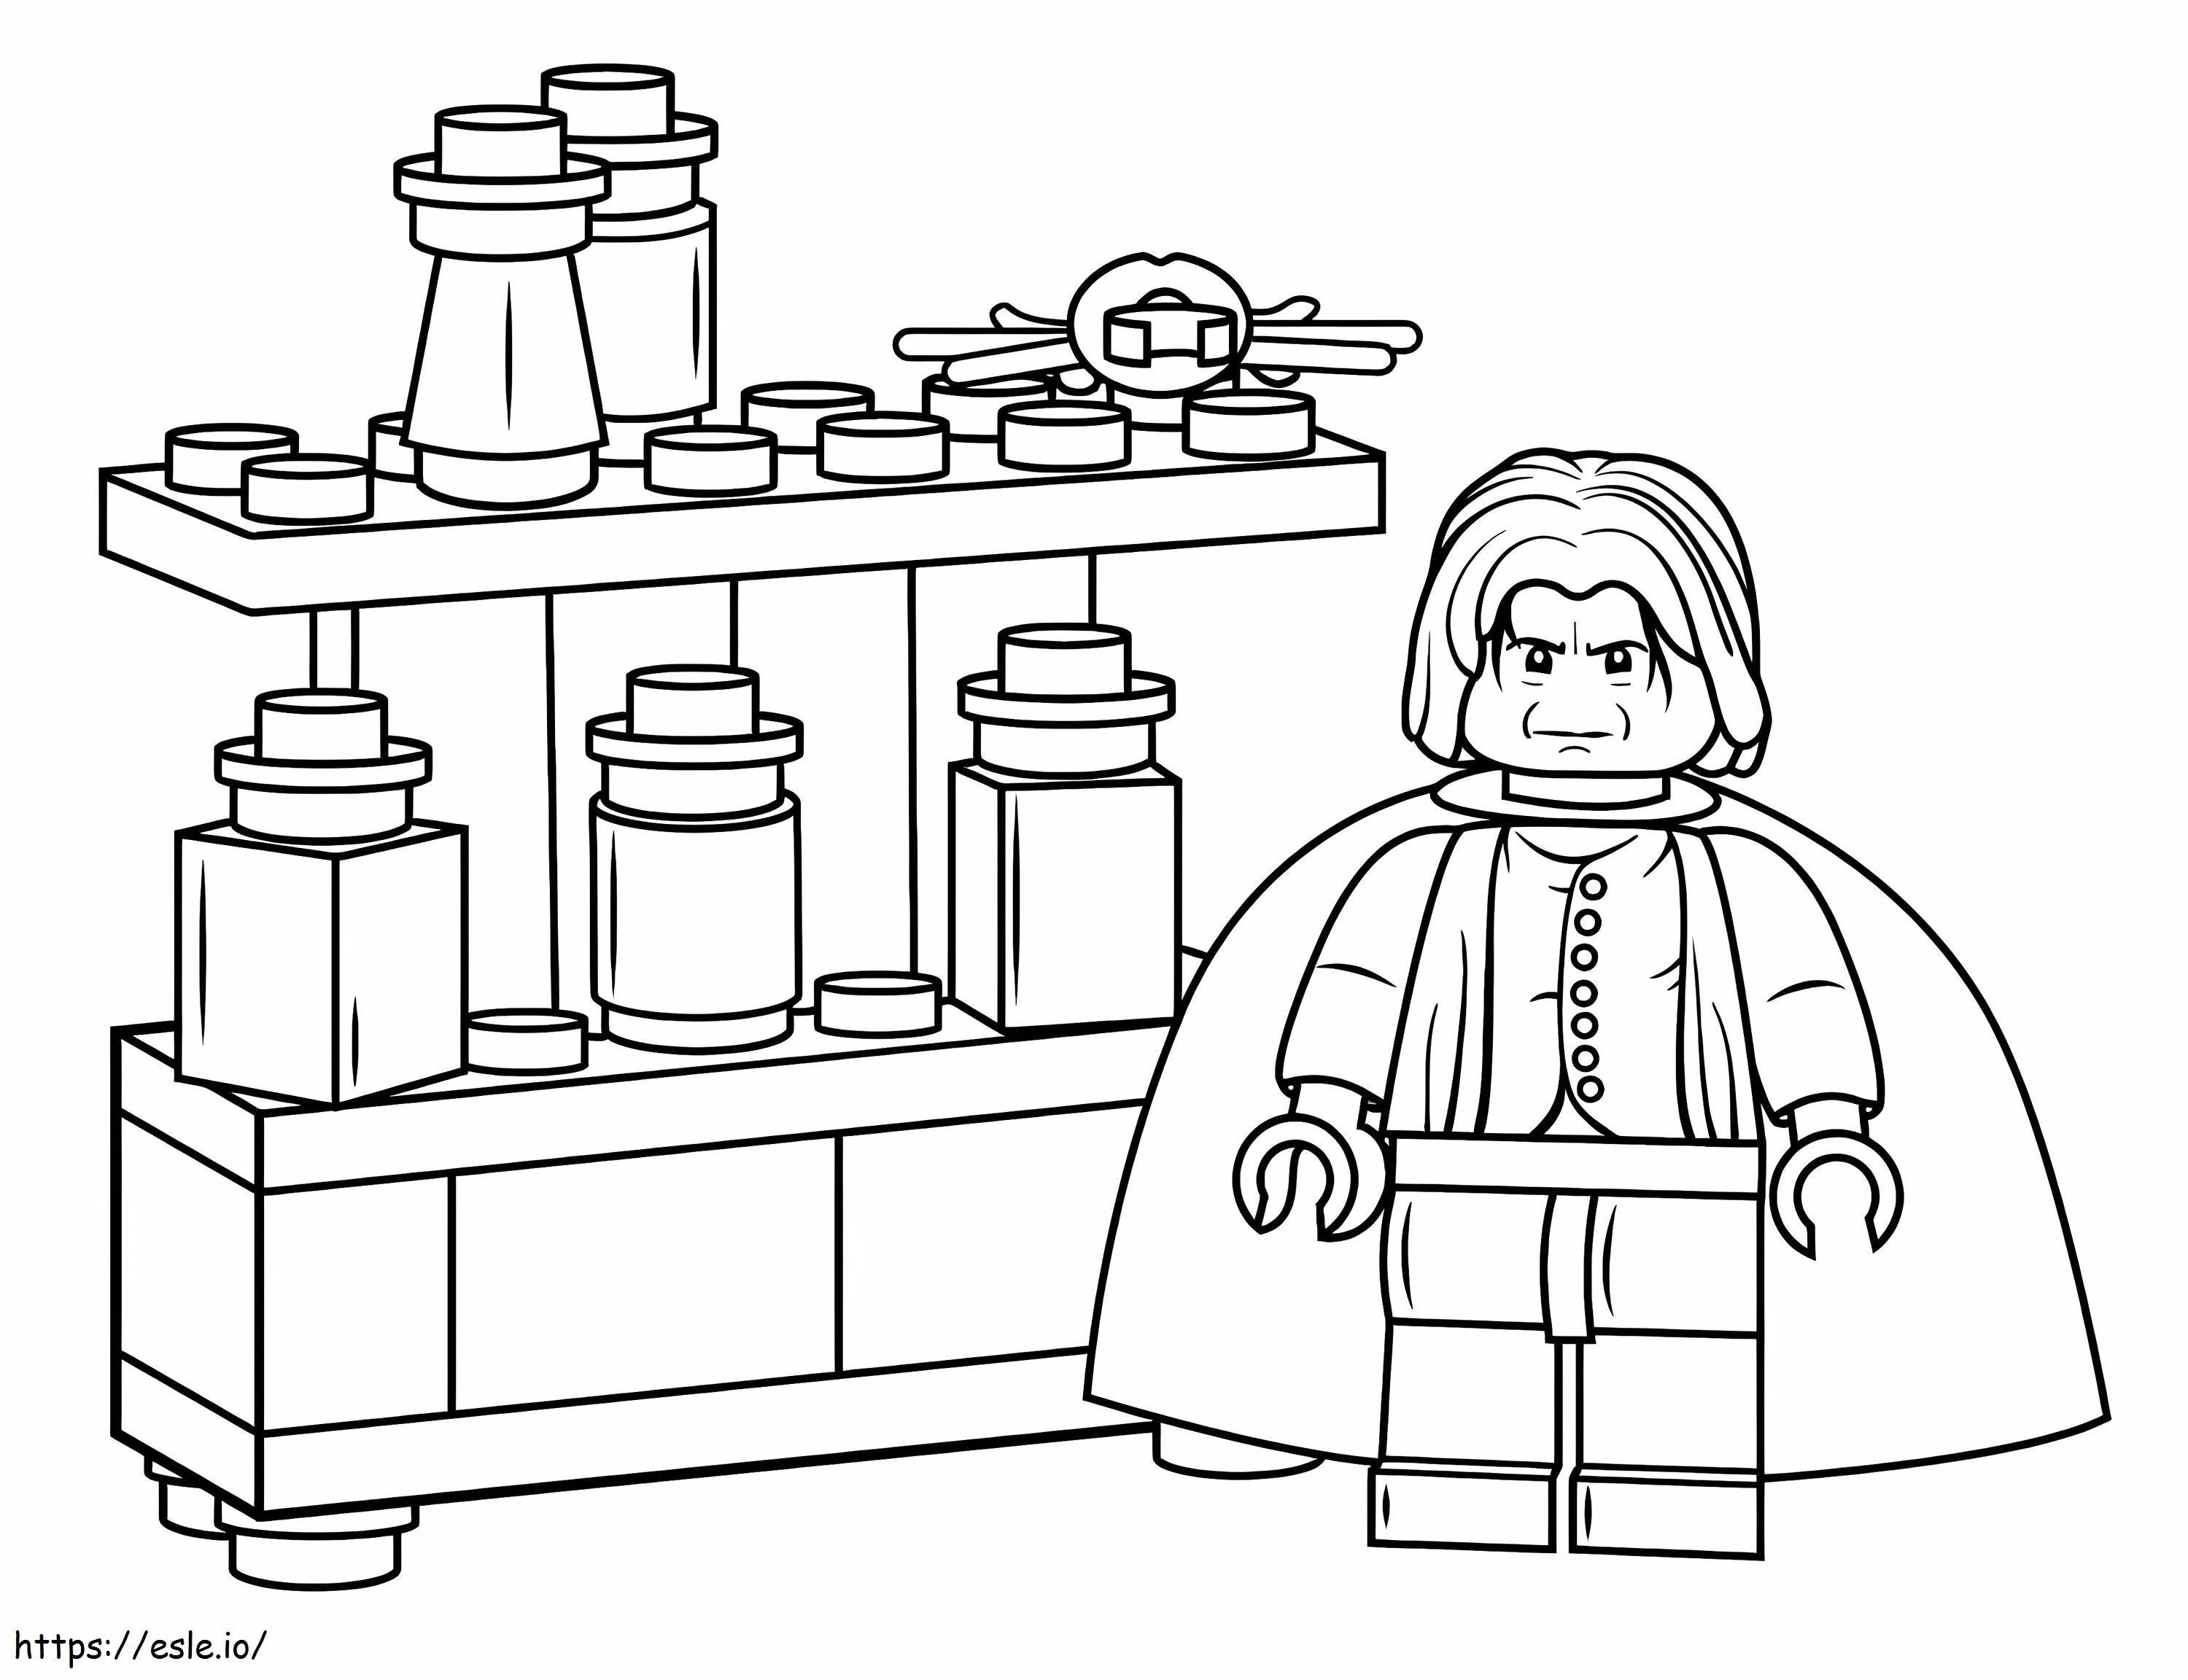 Lego Severus Snape coloring page